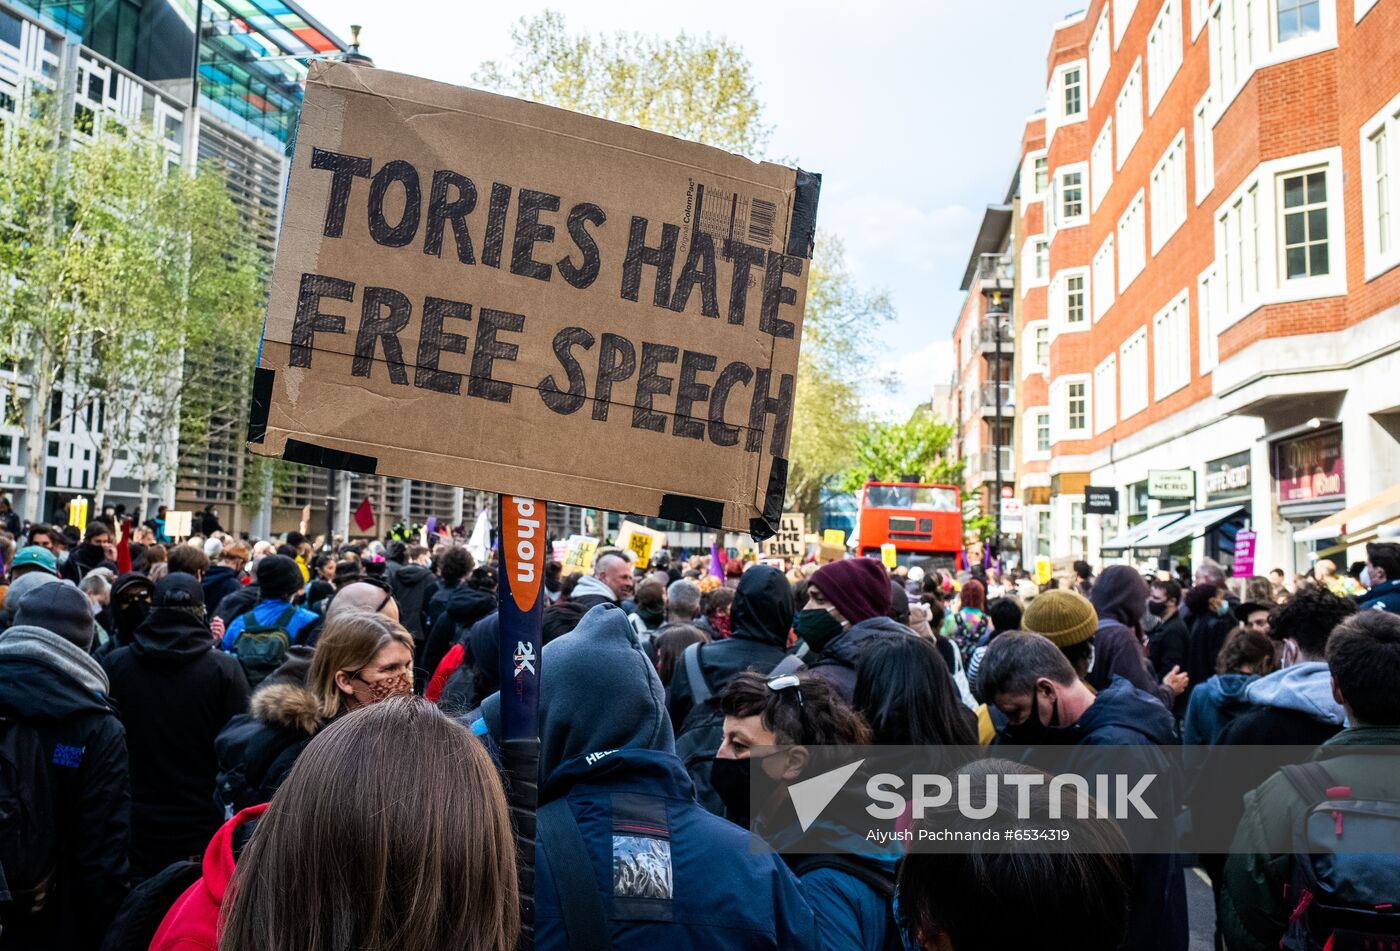 Britain Protests